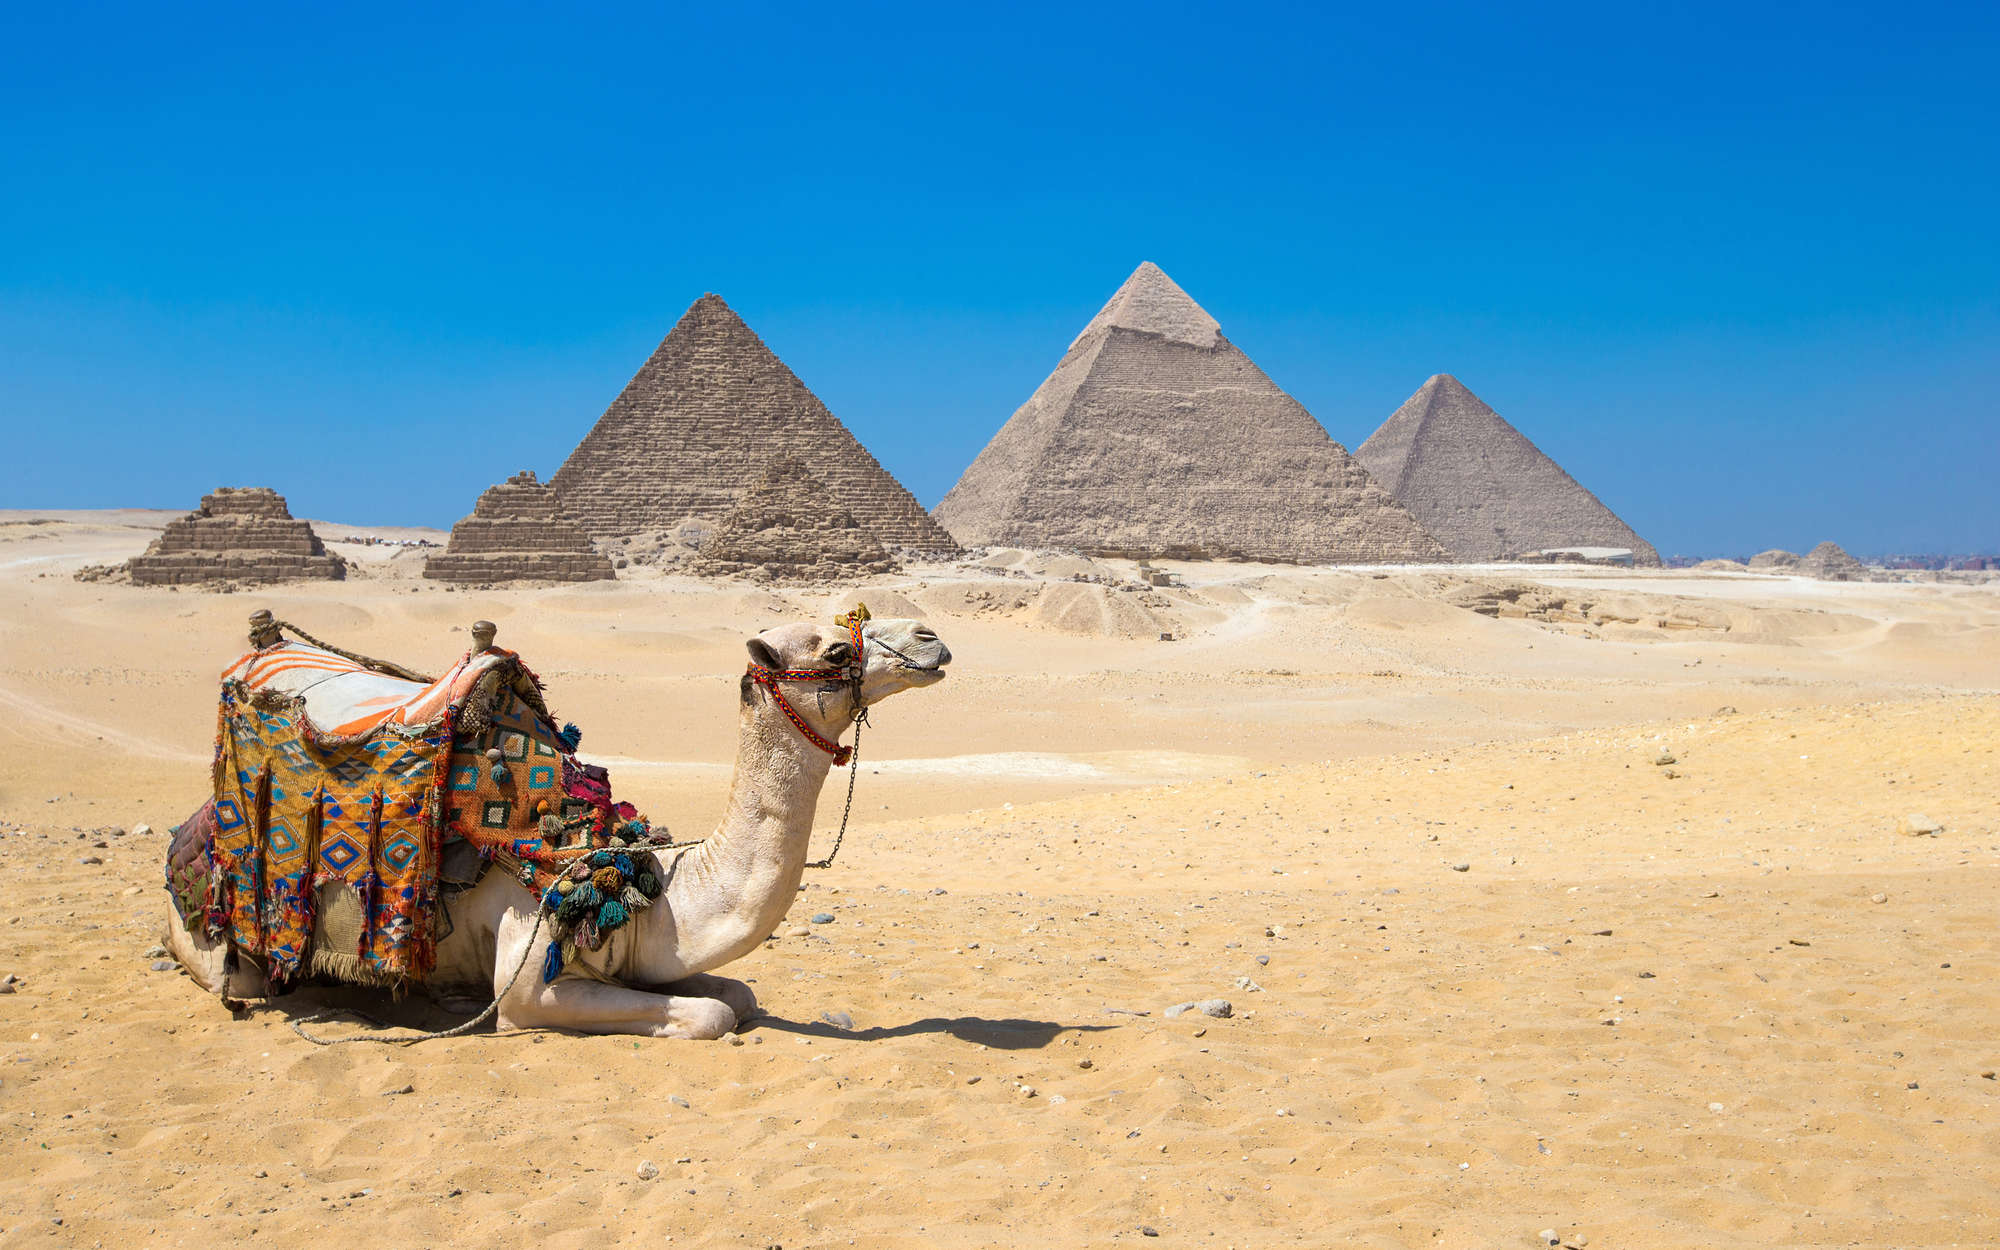             Papel pintable Pirámides de Giza con Camello - tejido no tejido liso mate
        